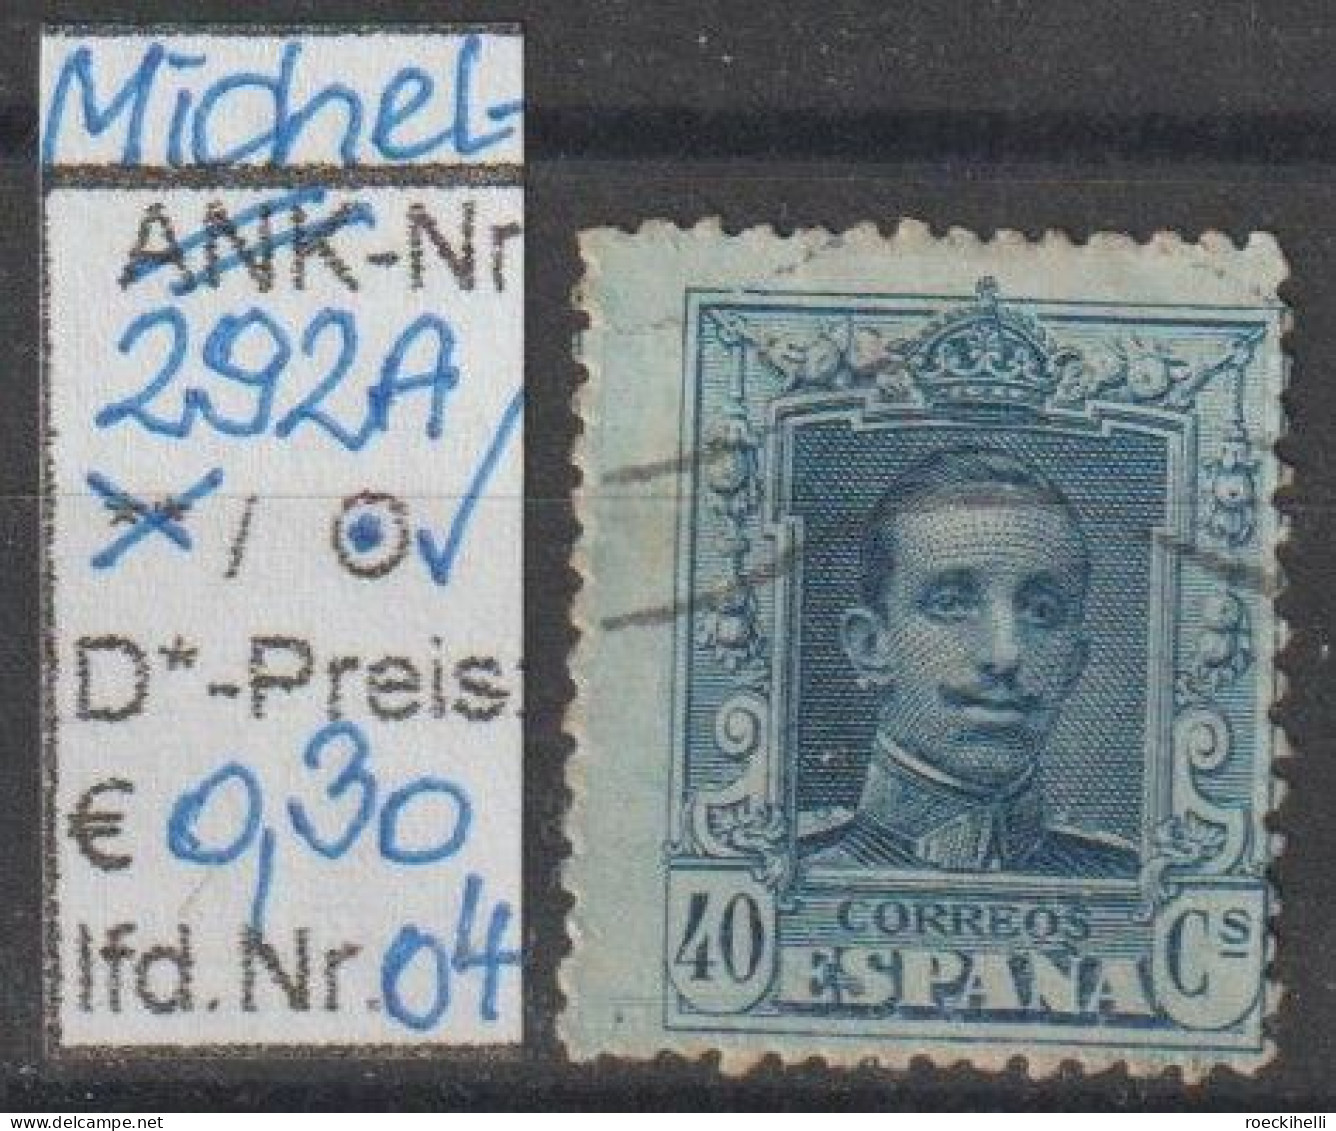 1922/30 - SPANIEN - FM/DM "König Alfons XIII im Rahmen" 40 C blau - o gestempelt - s.Scan (292Ao 01-05 esp)